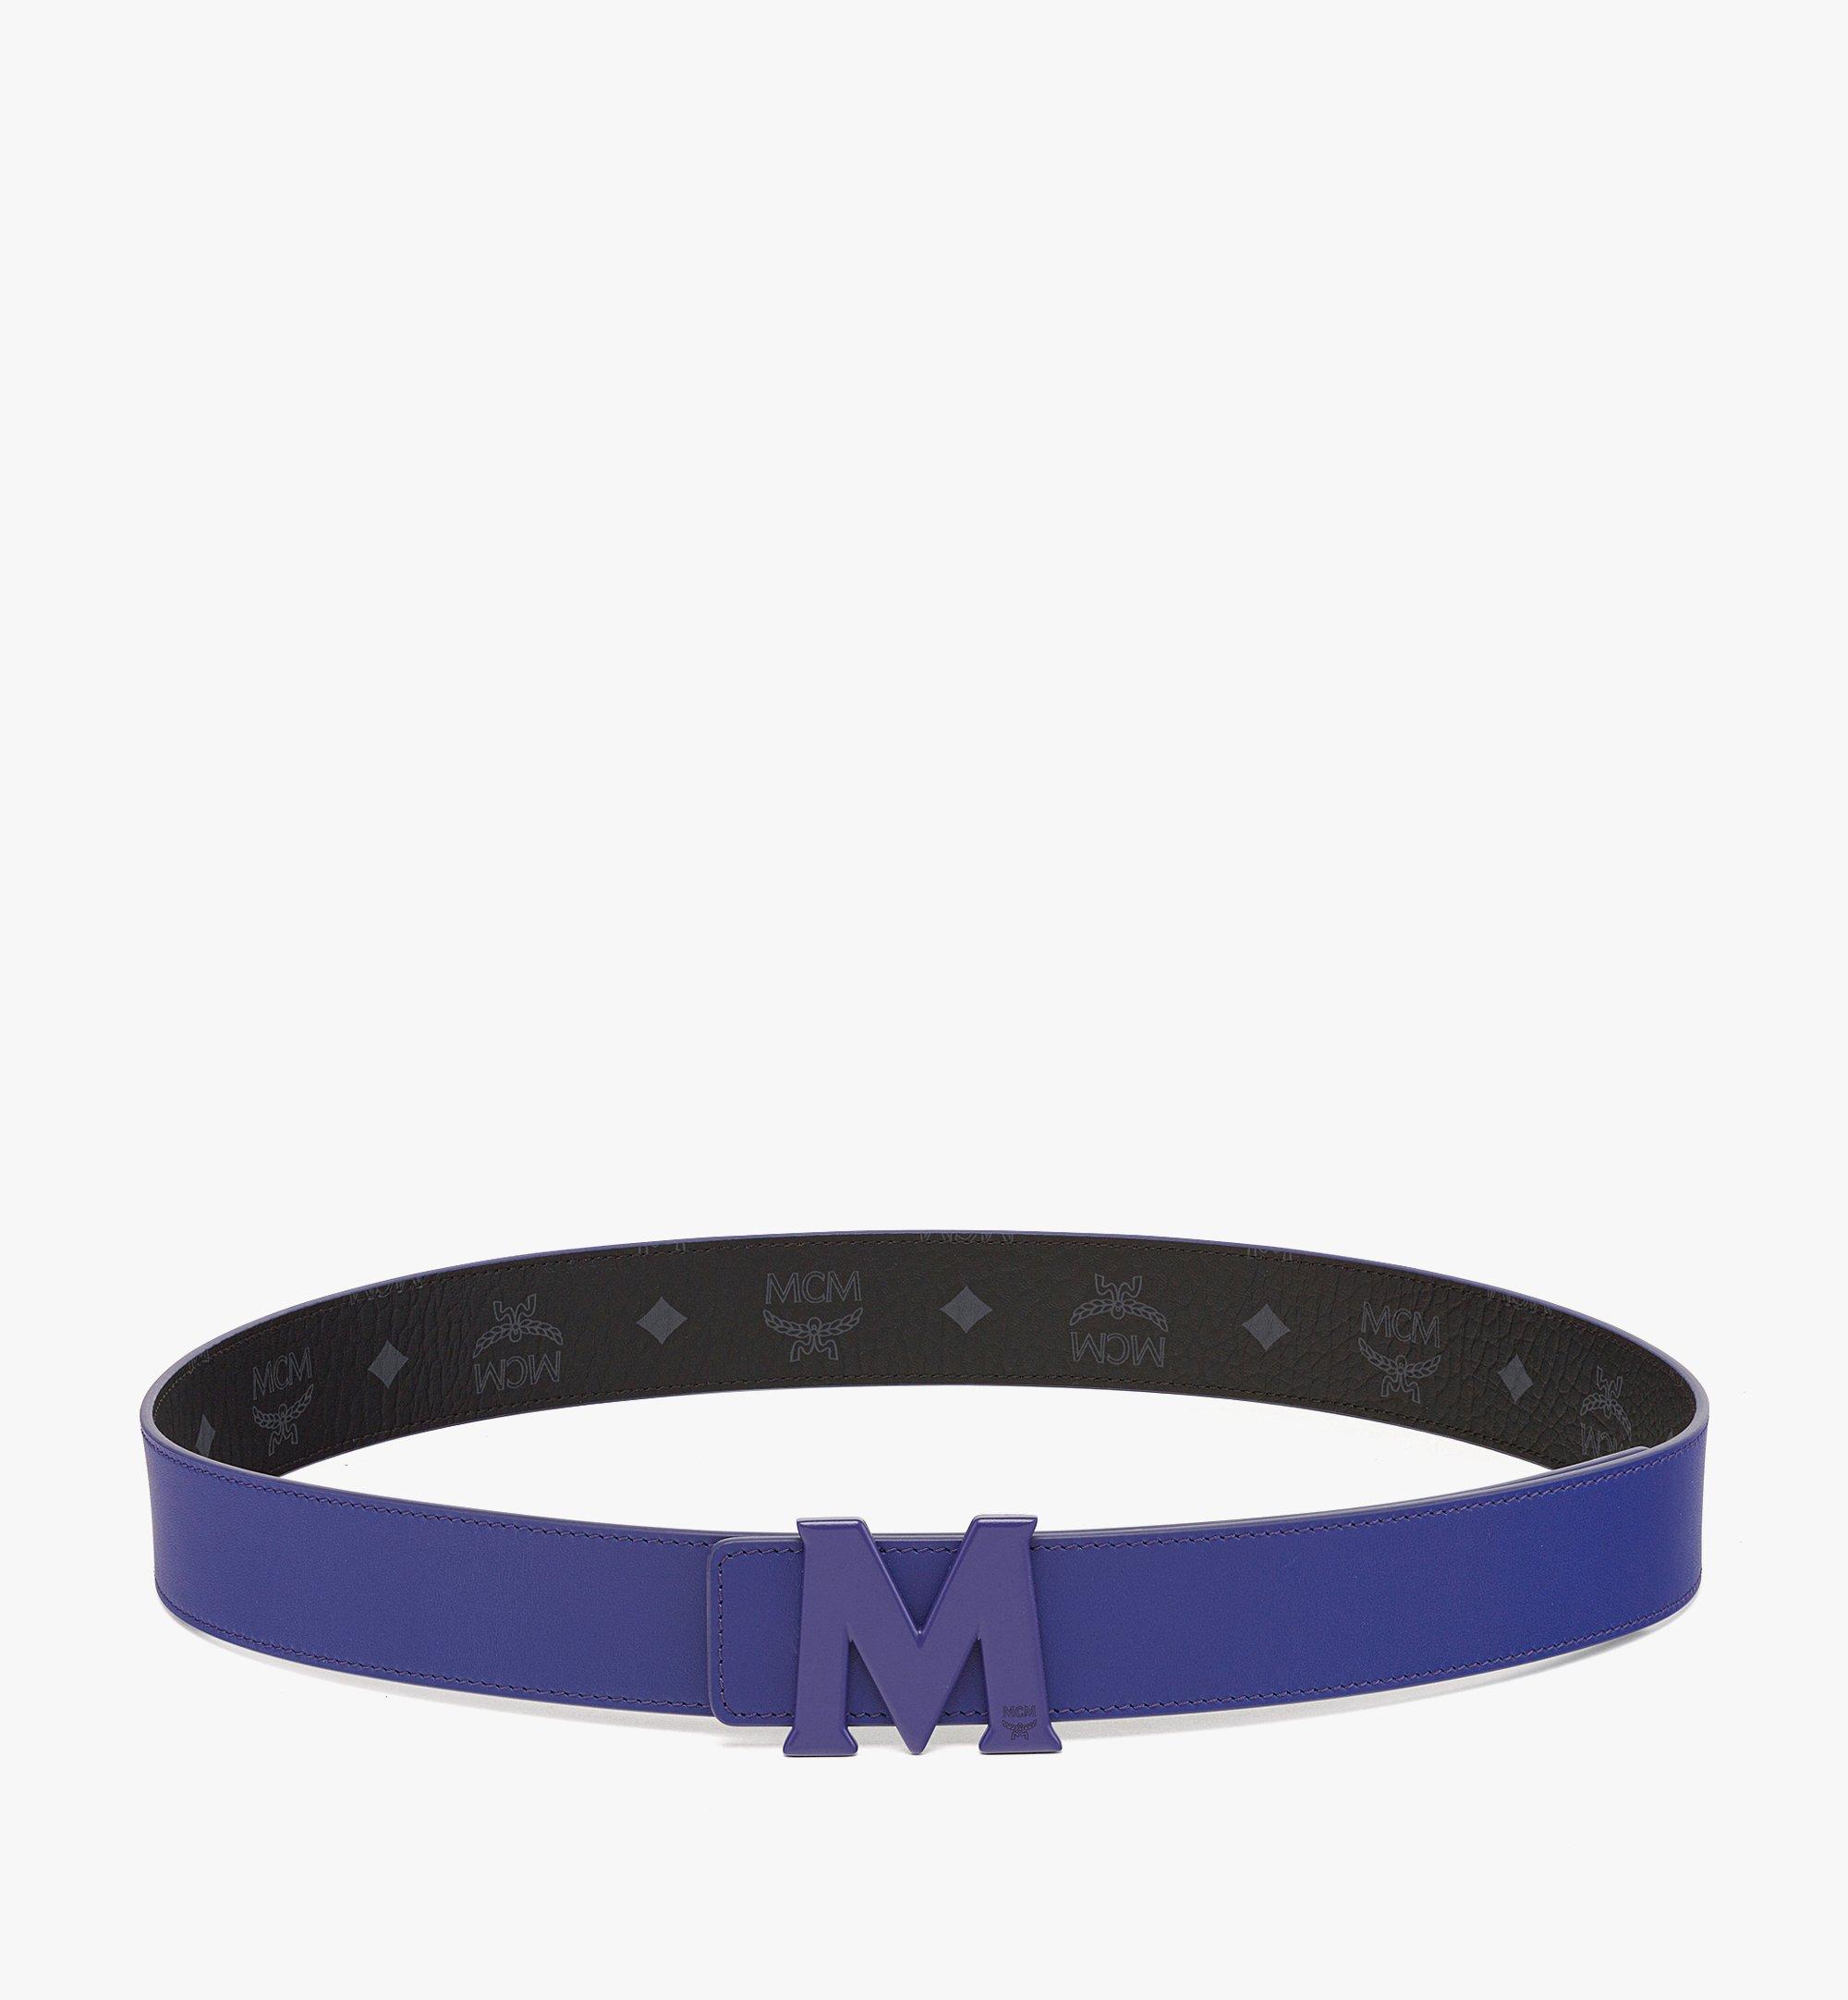 Custom size your MCM Belt 